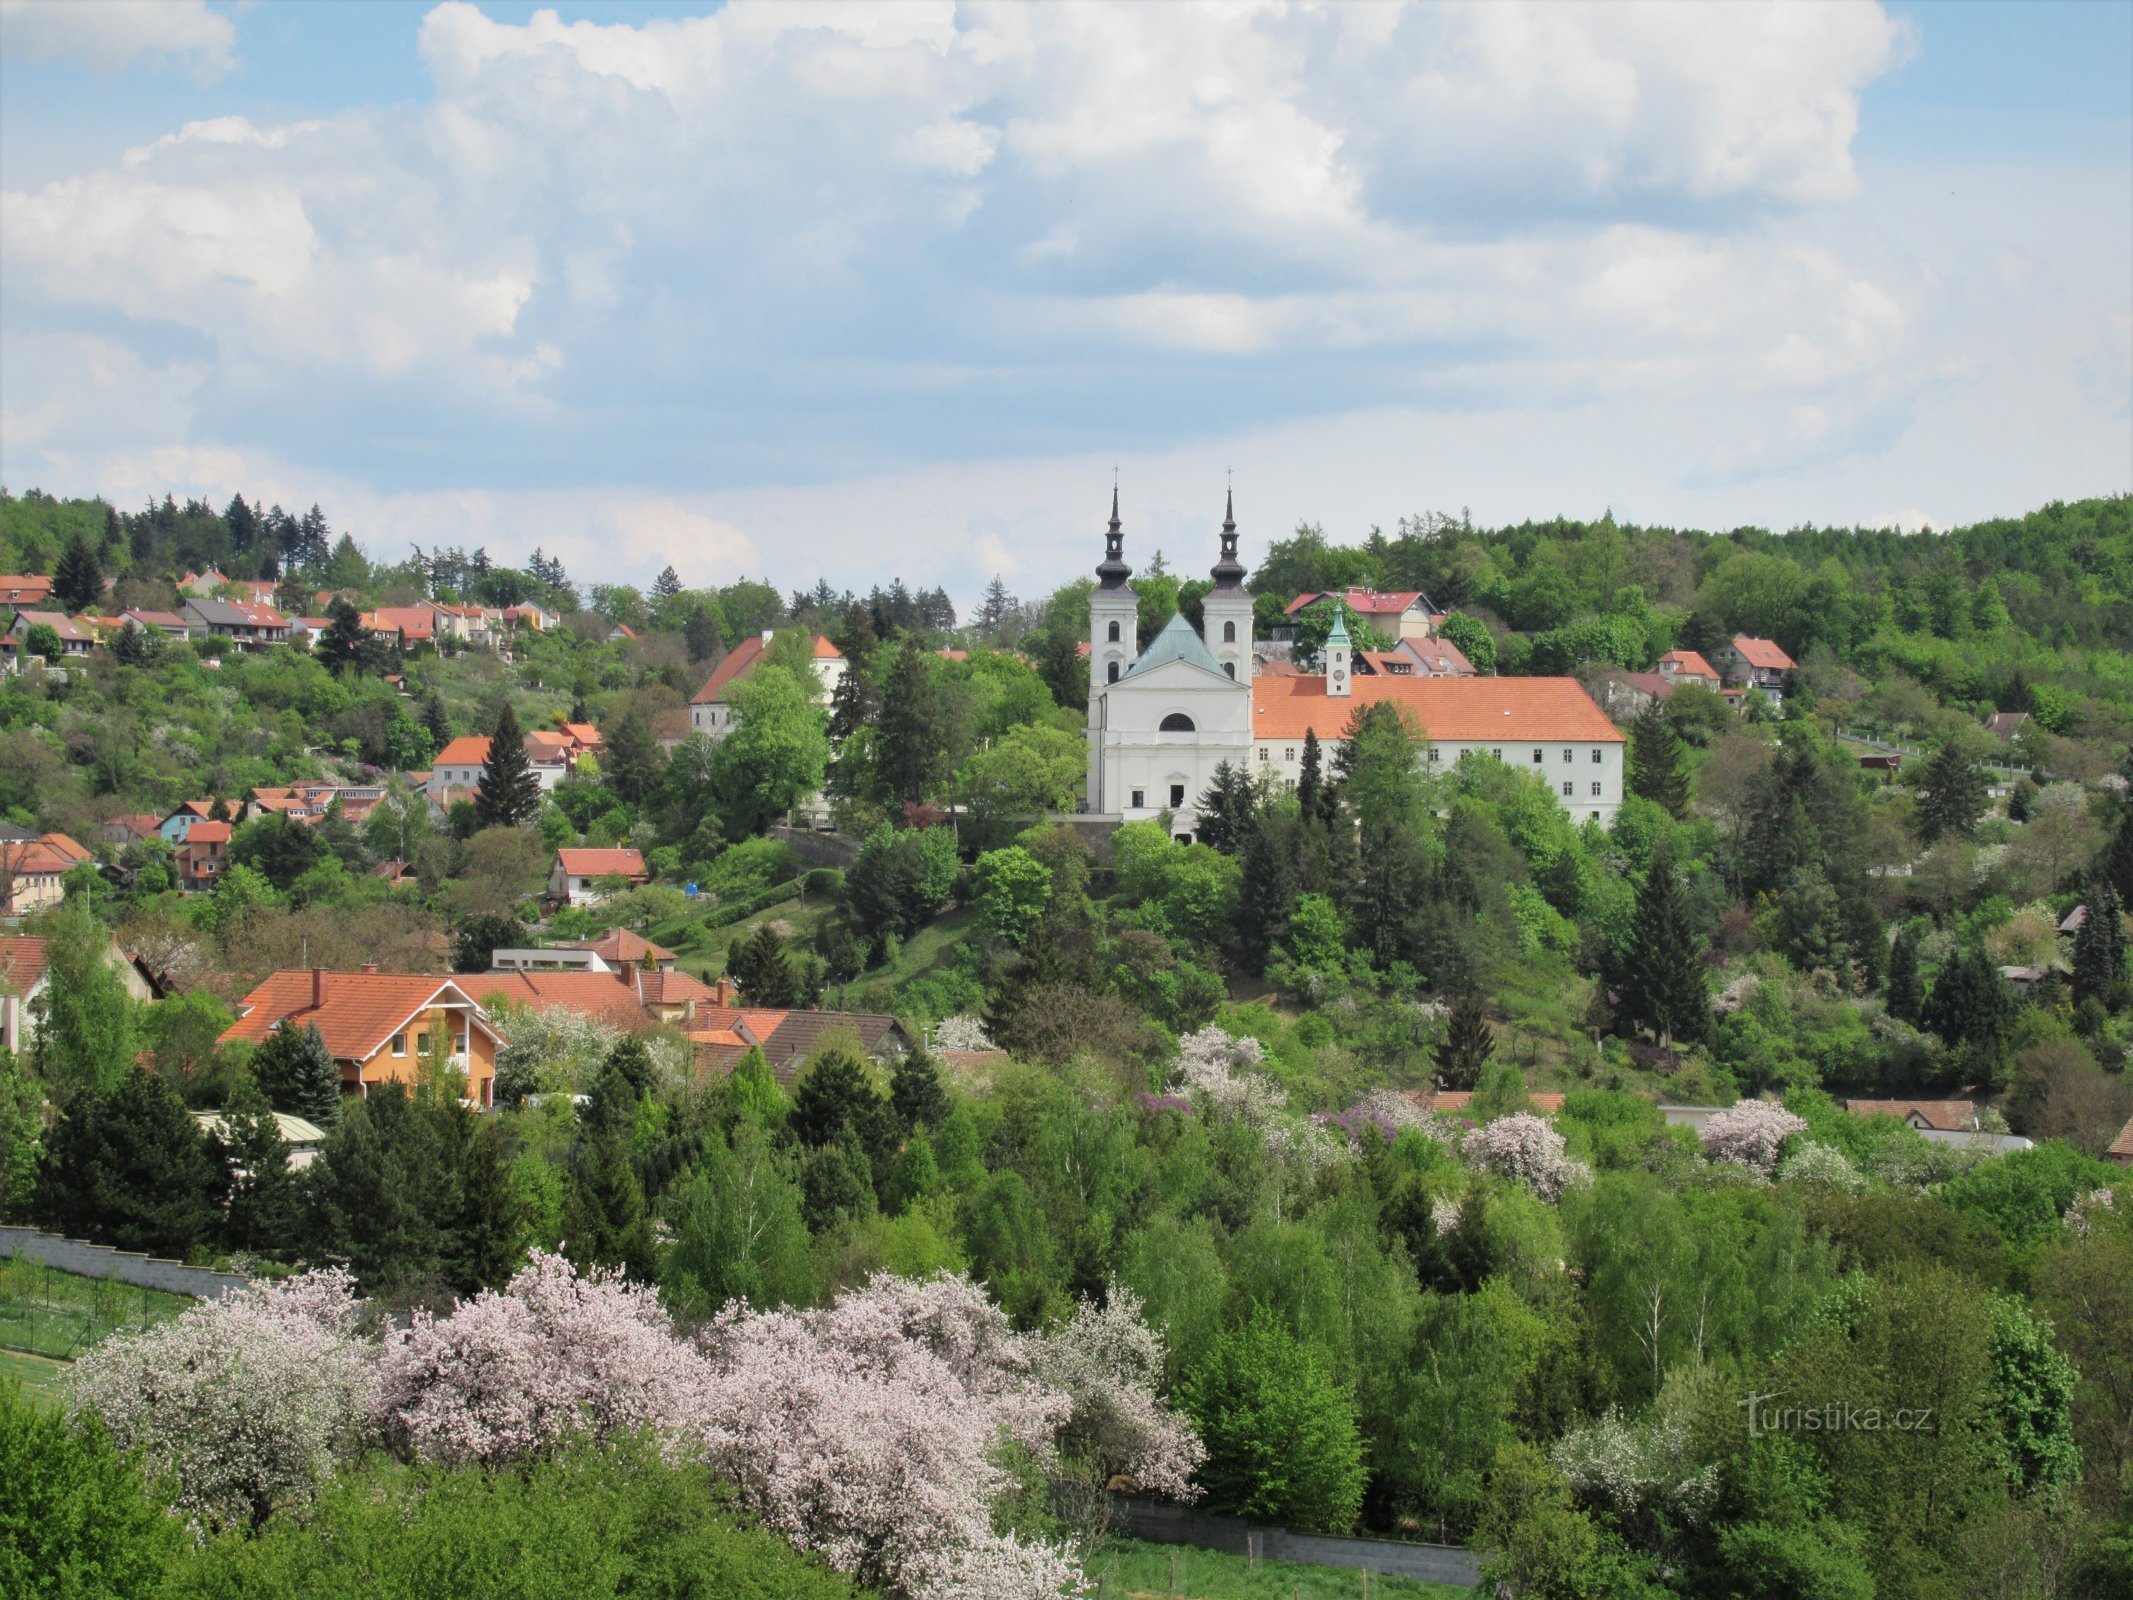 Vranov lângă Brno - vedere asupra satului